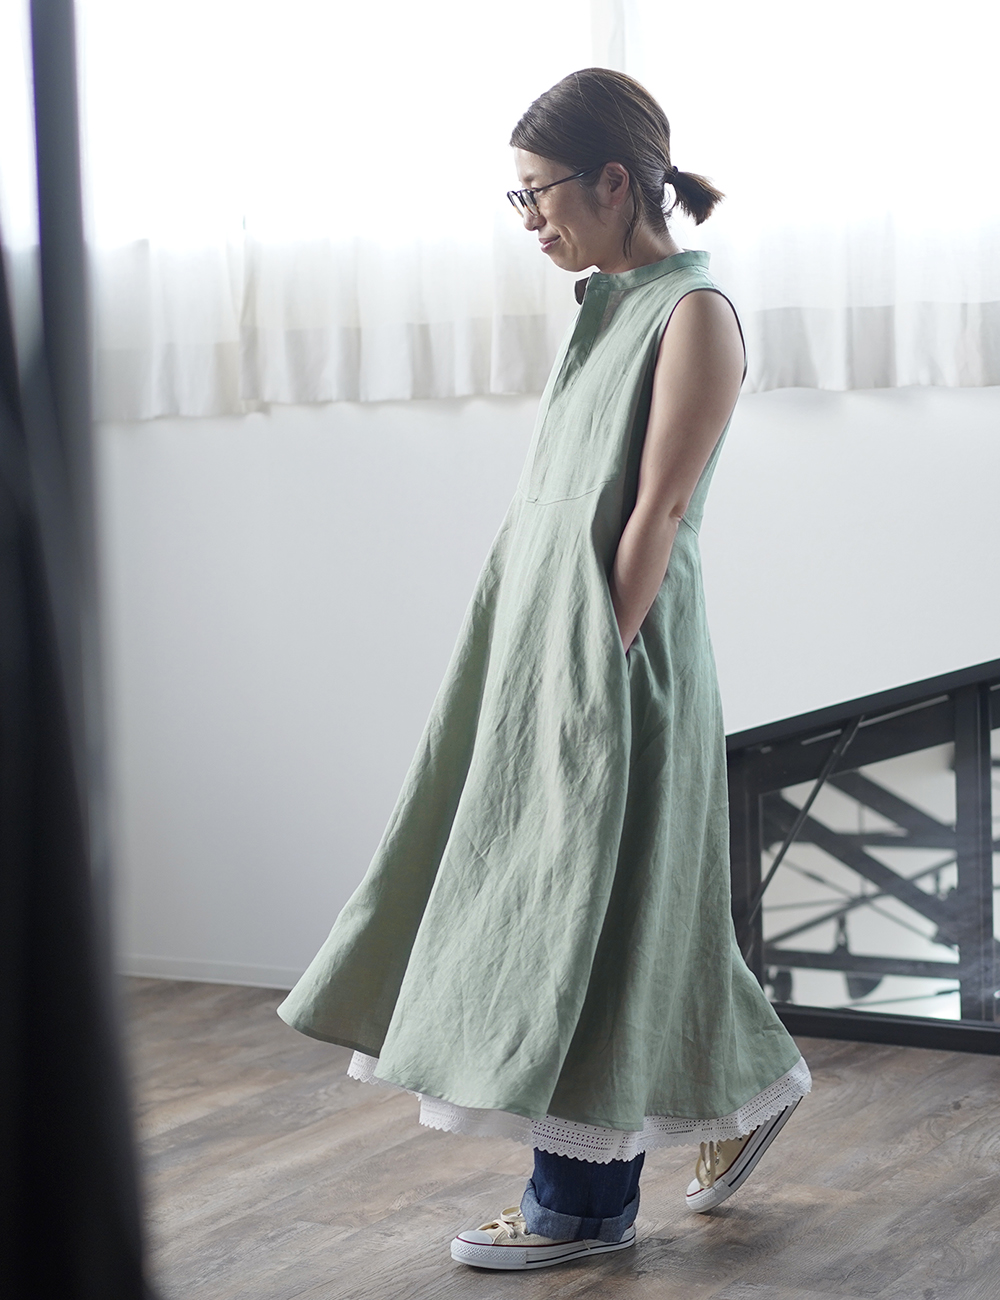 【wafu】Linen dress  リネンワンピーススタンドカラー ノースリーブ ドレス / 青磁鼠(せいじねず) a019e-snz1